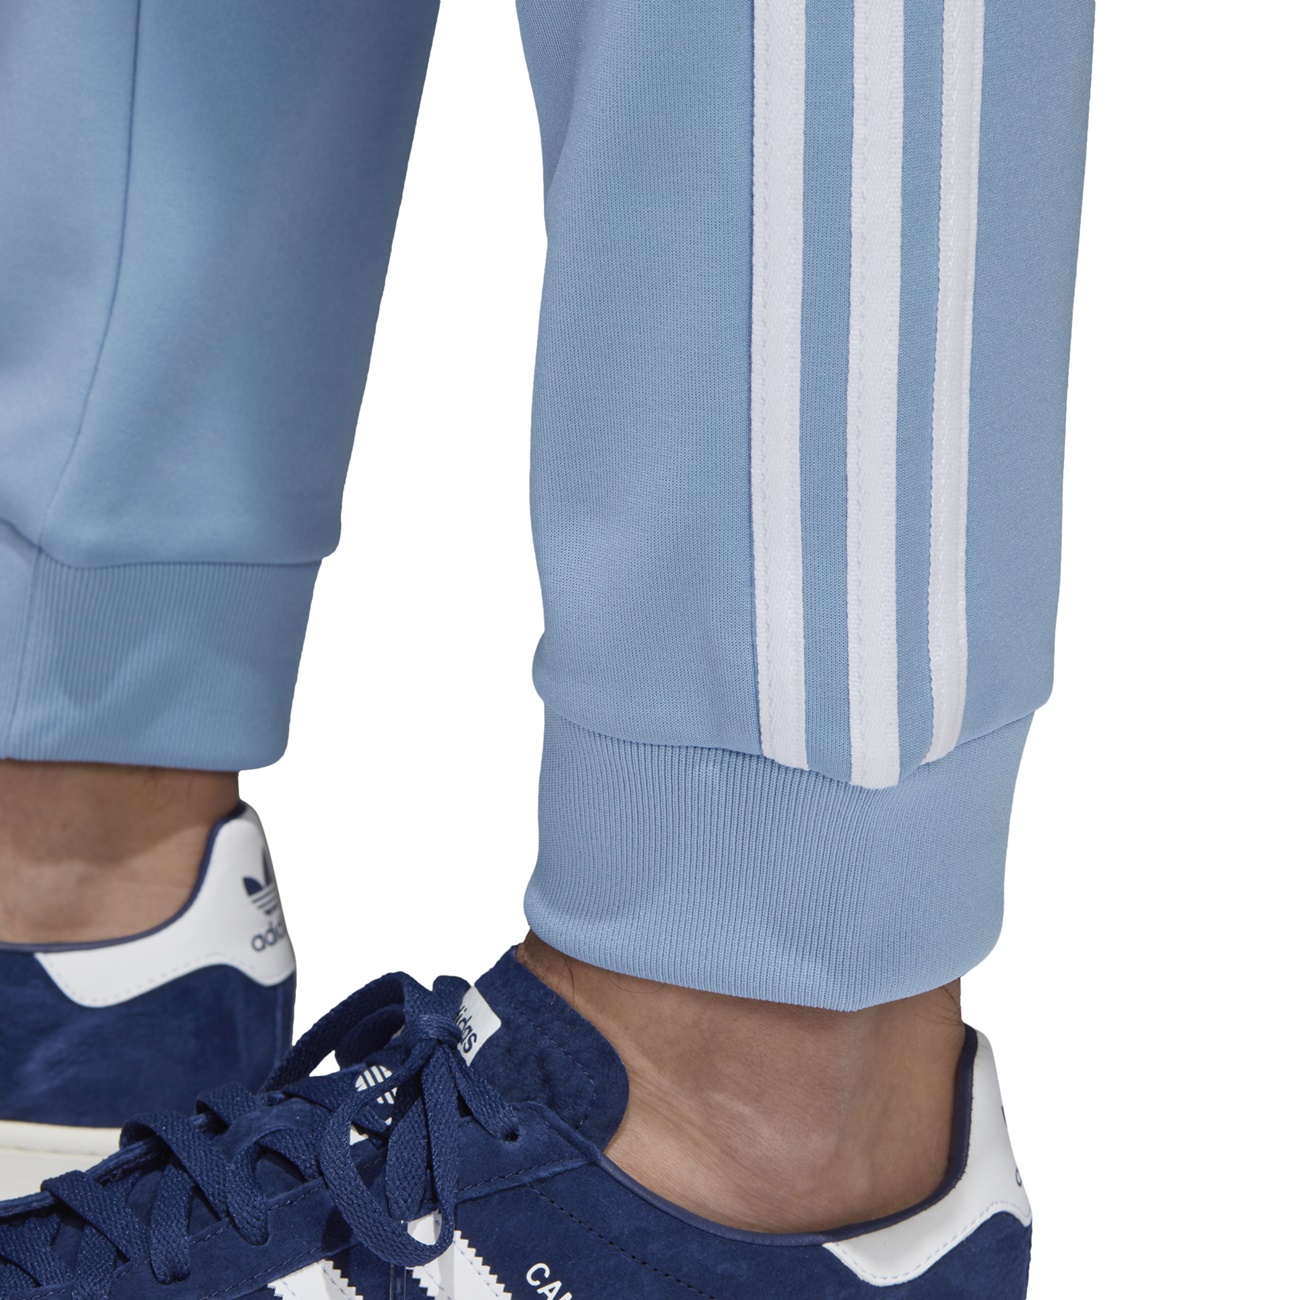 ash blue adidas pants